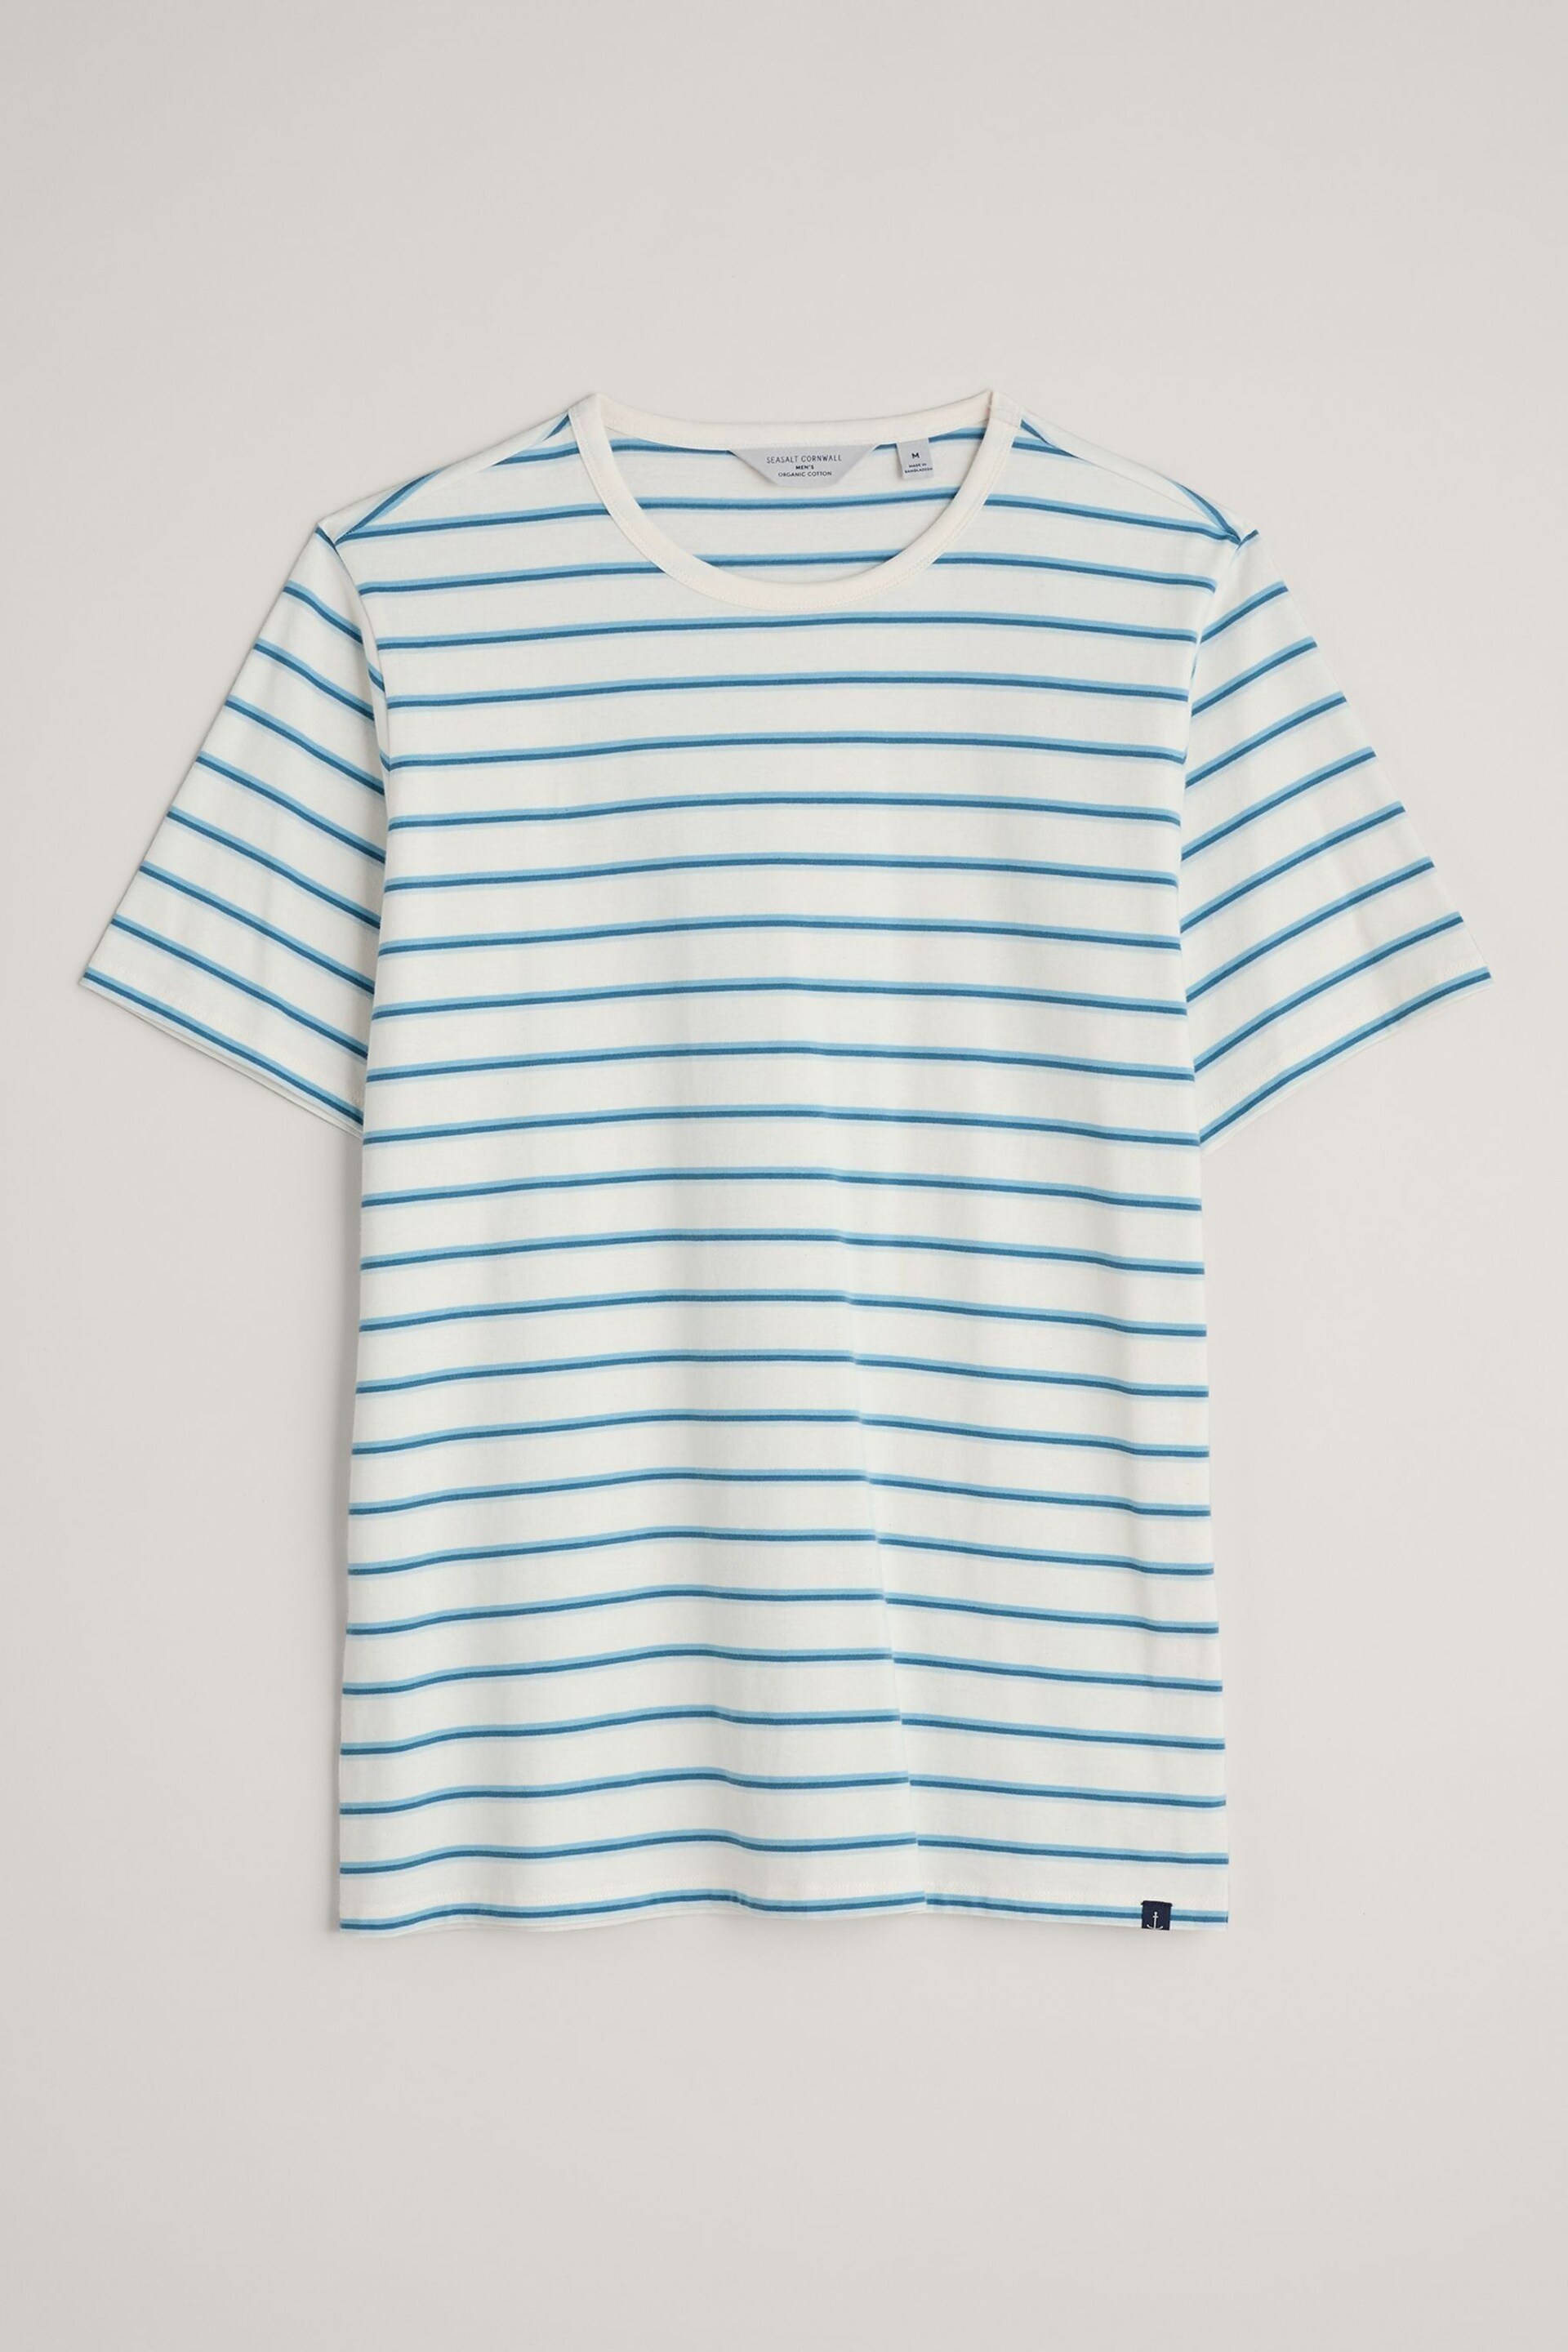 Seasalt Cornwall Blue Mens Seven Seas Sailor T-Shirt - Image 4 of 5